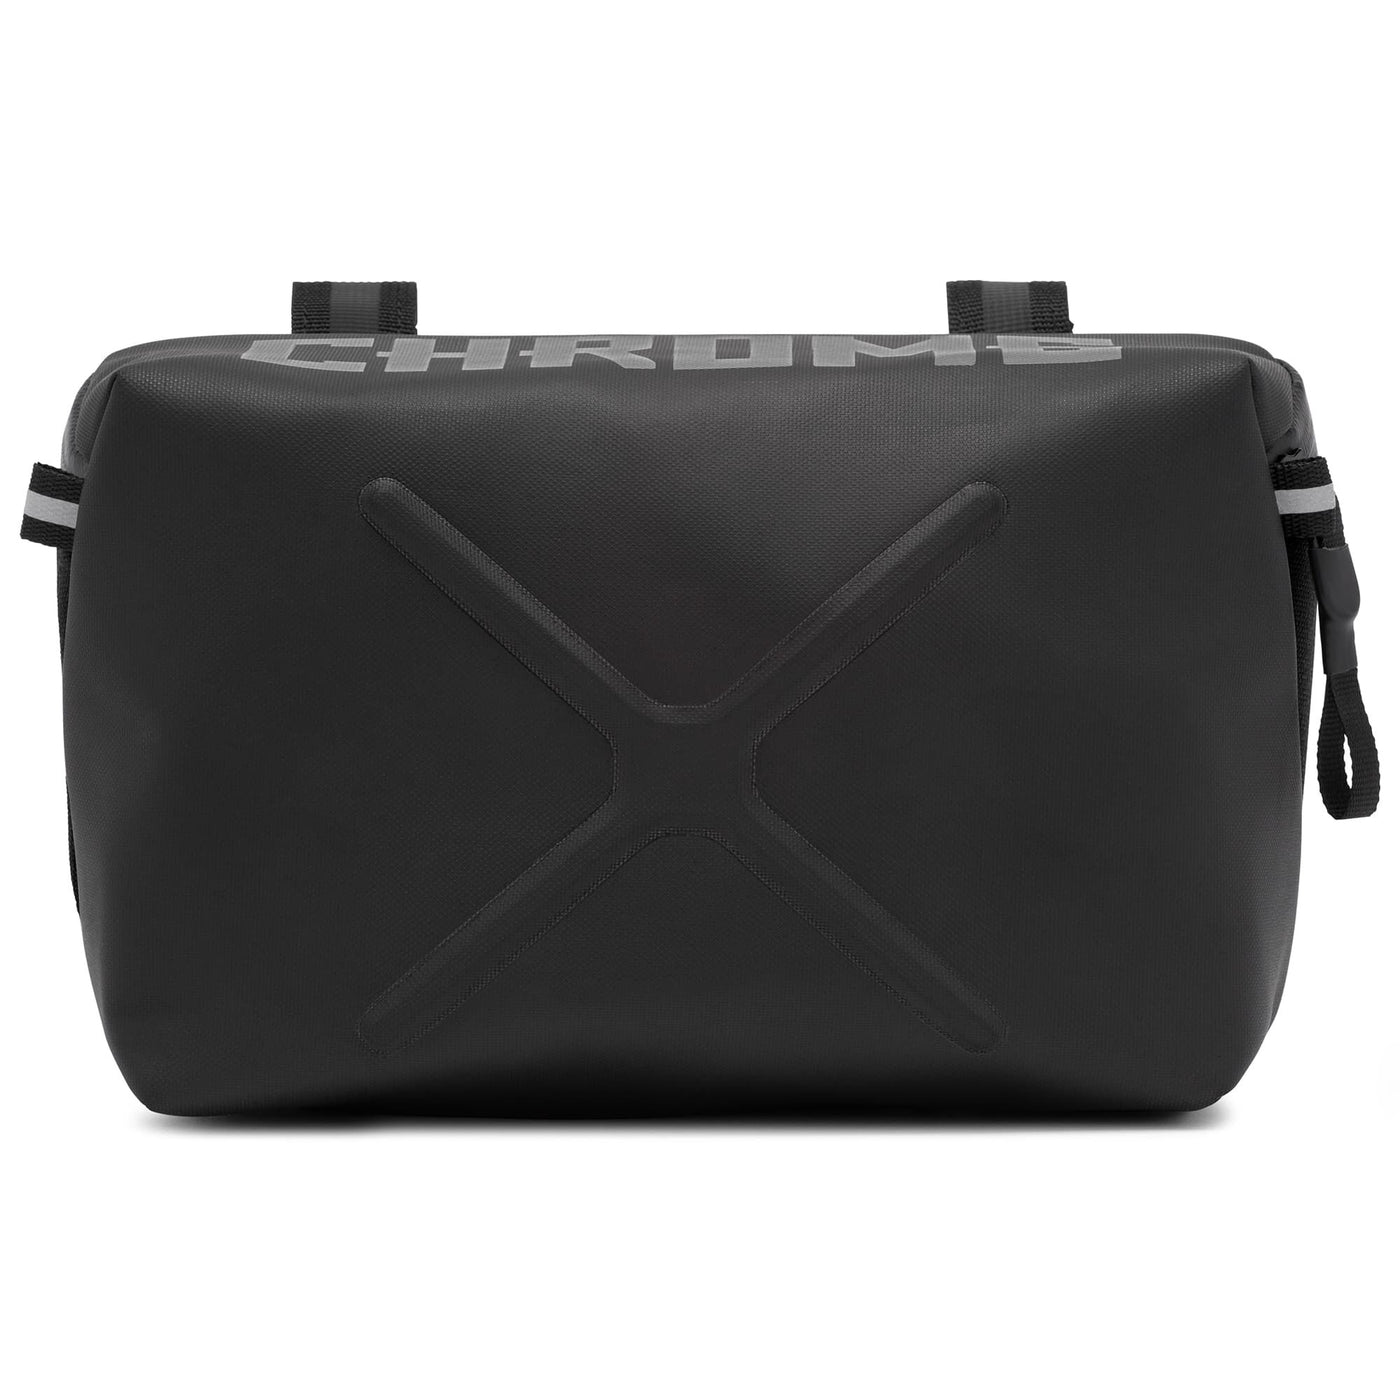 Helix Handlebar Bag by Chrome Industries